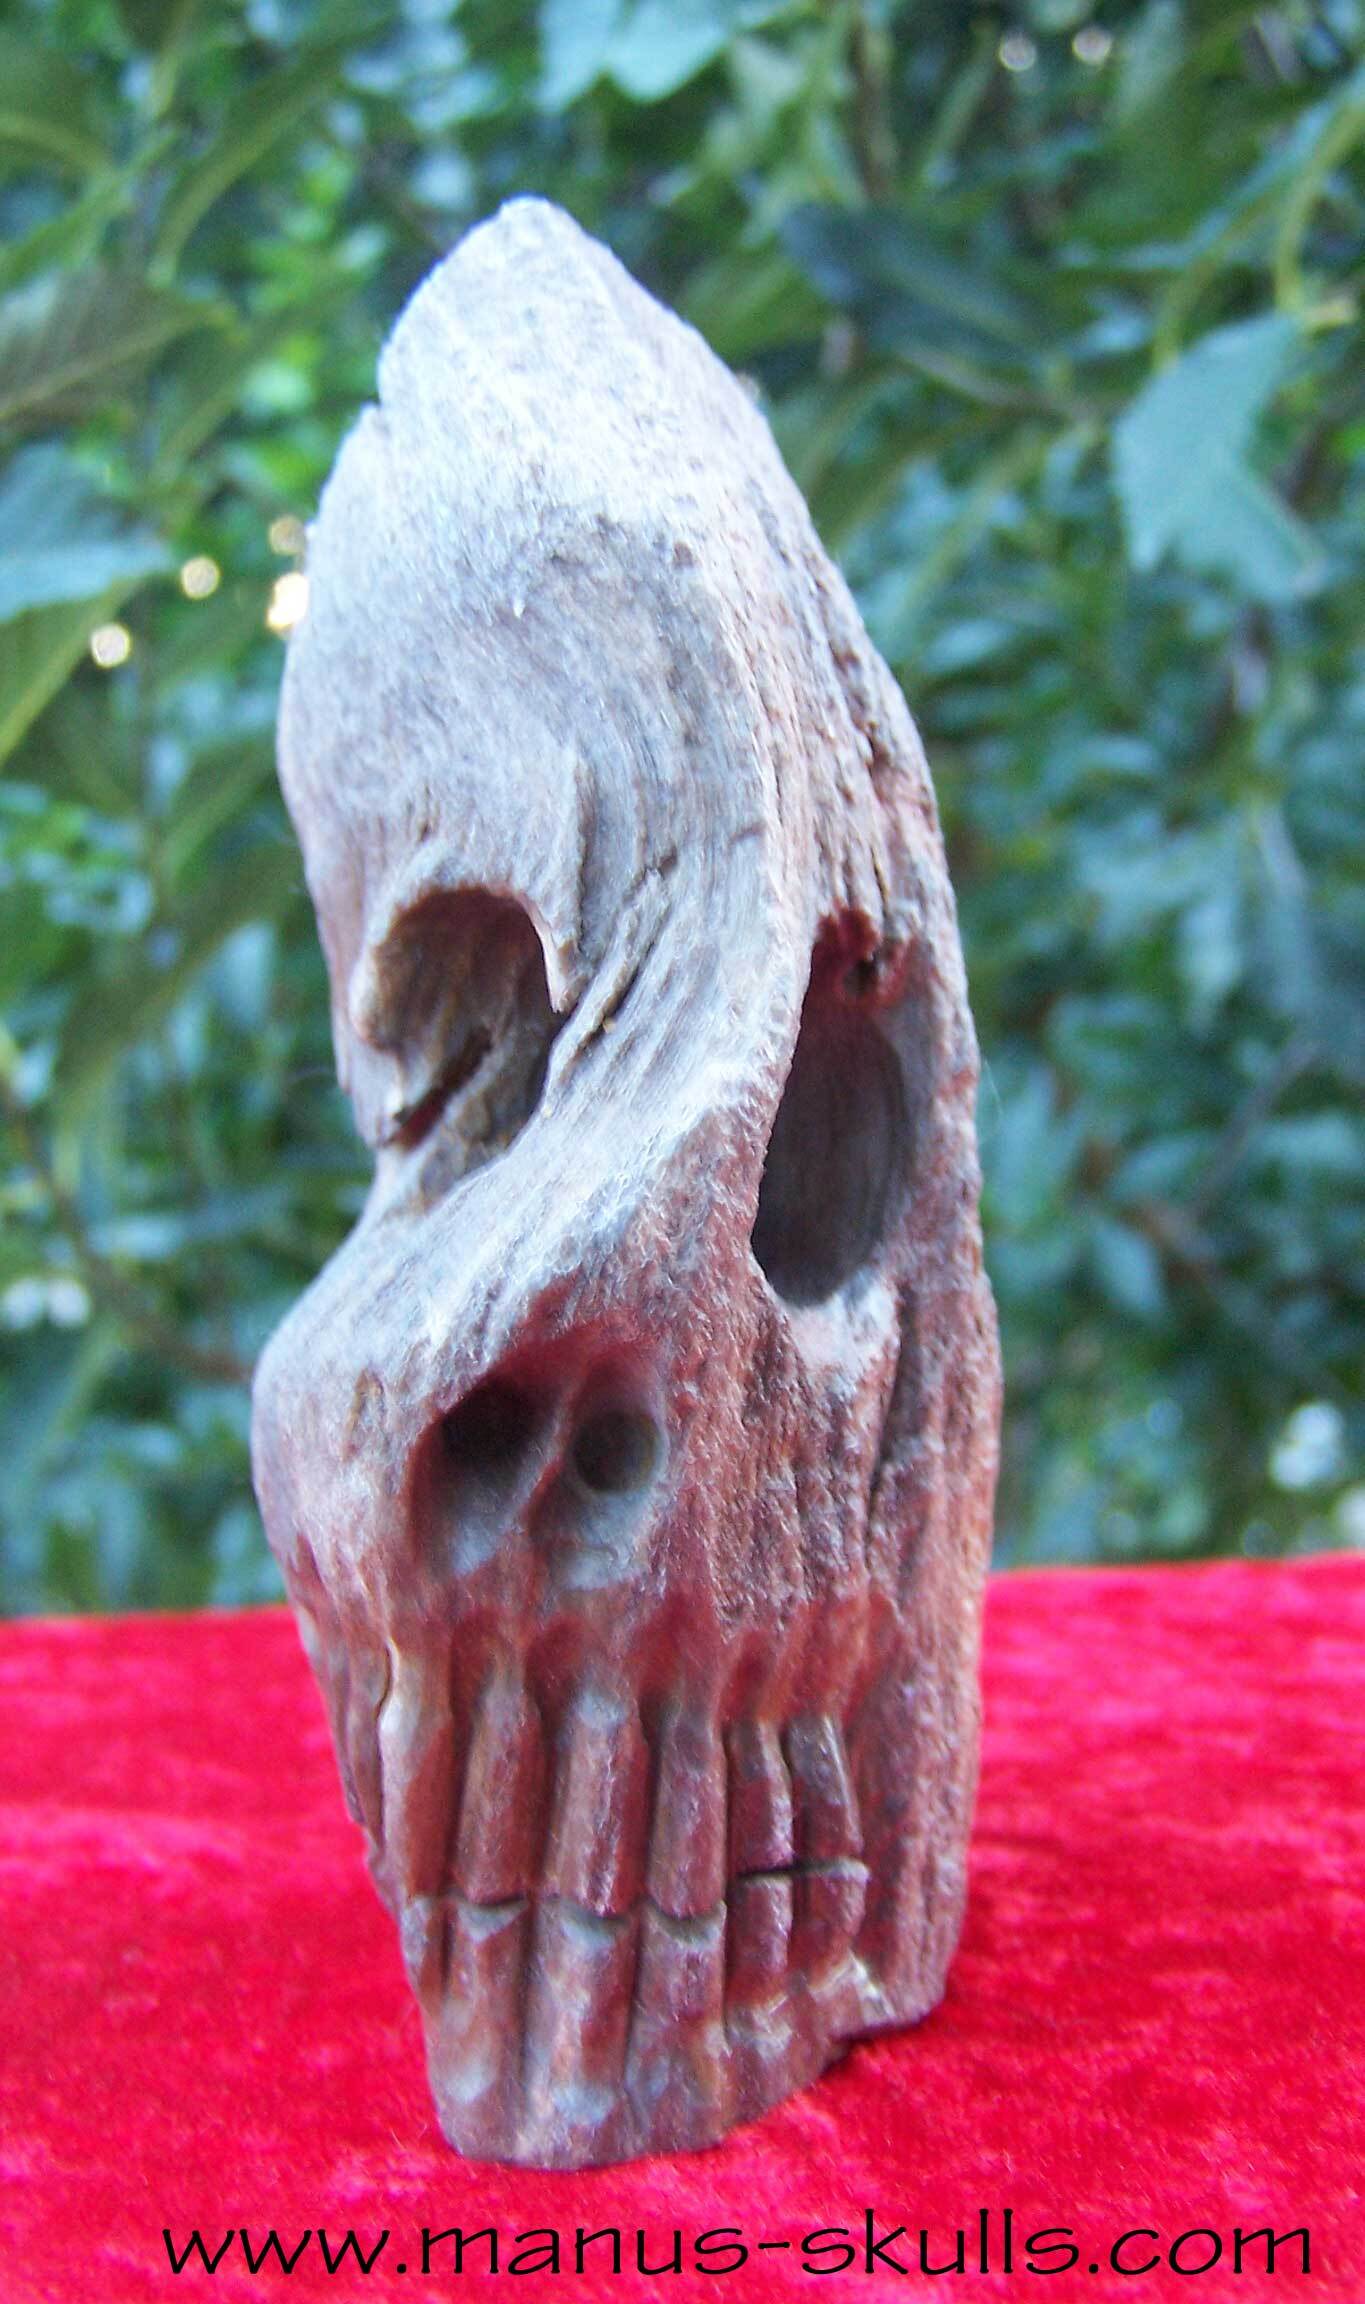 Petrified Wood Skull